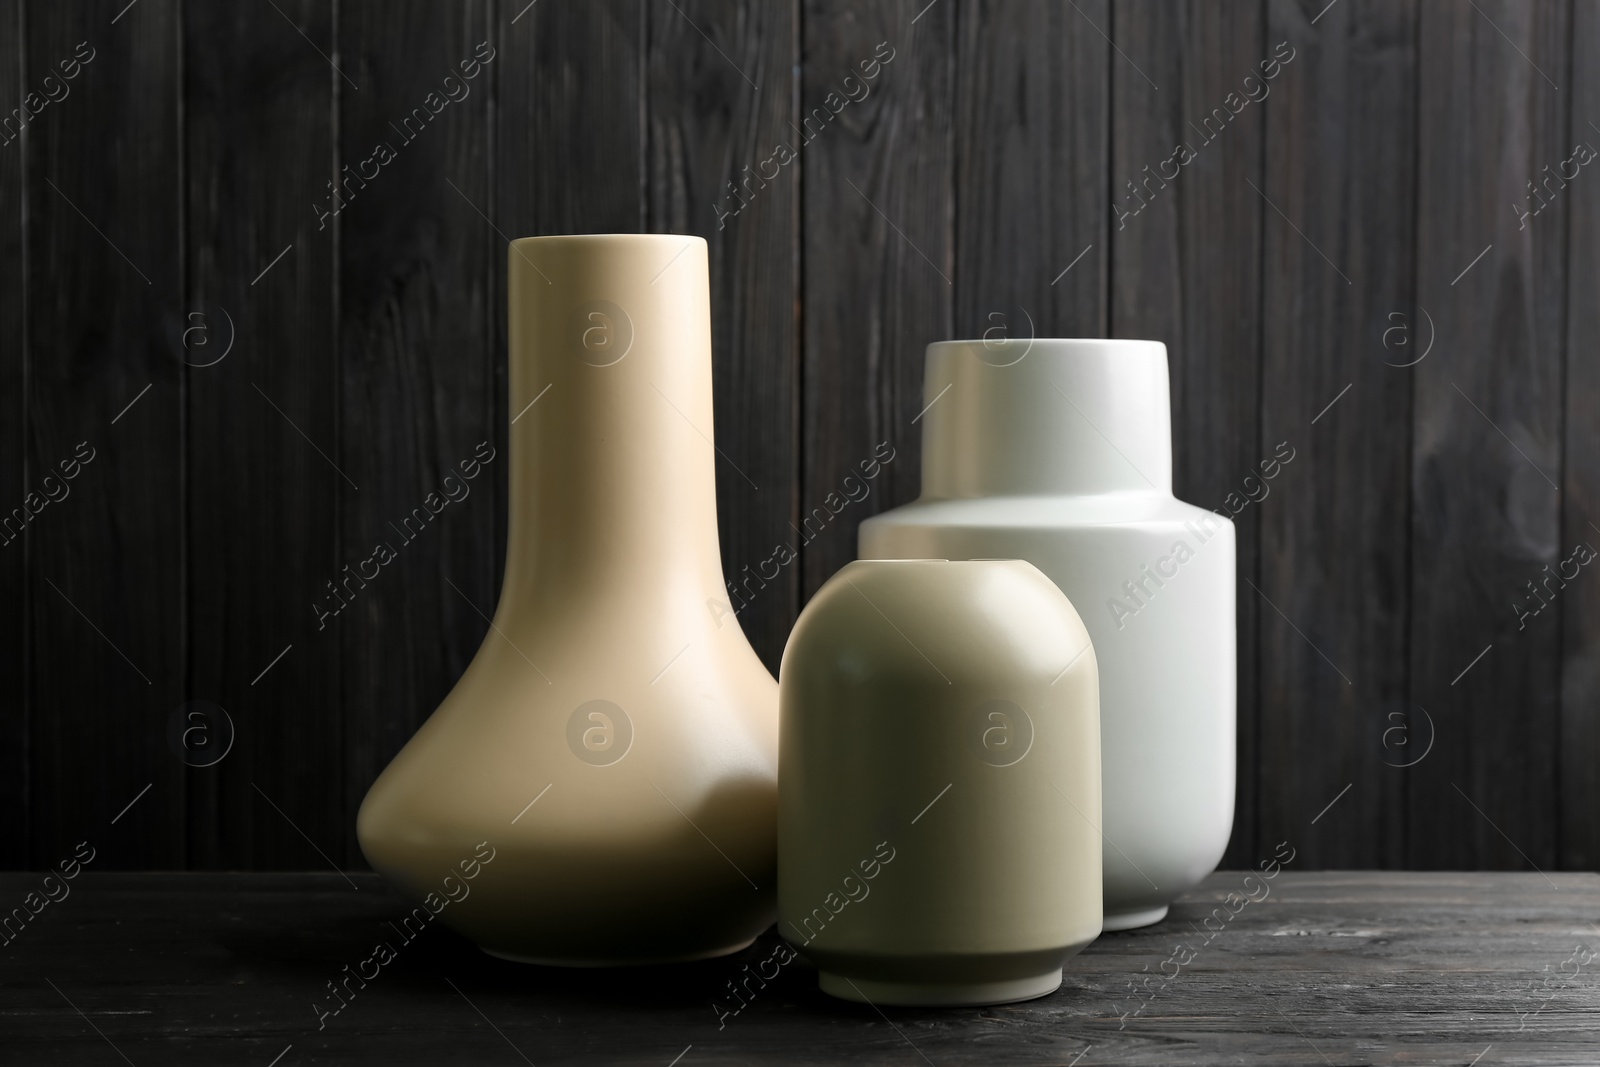 Photo of Stylish ceramic vases on black wooden table